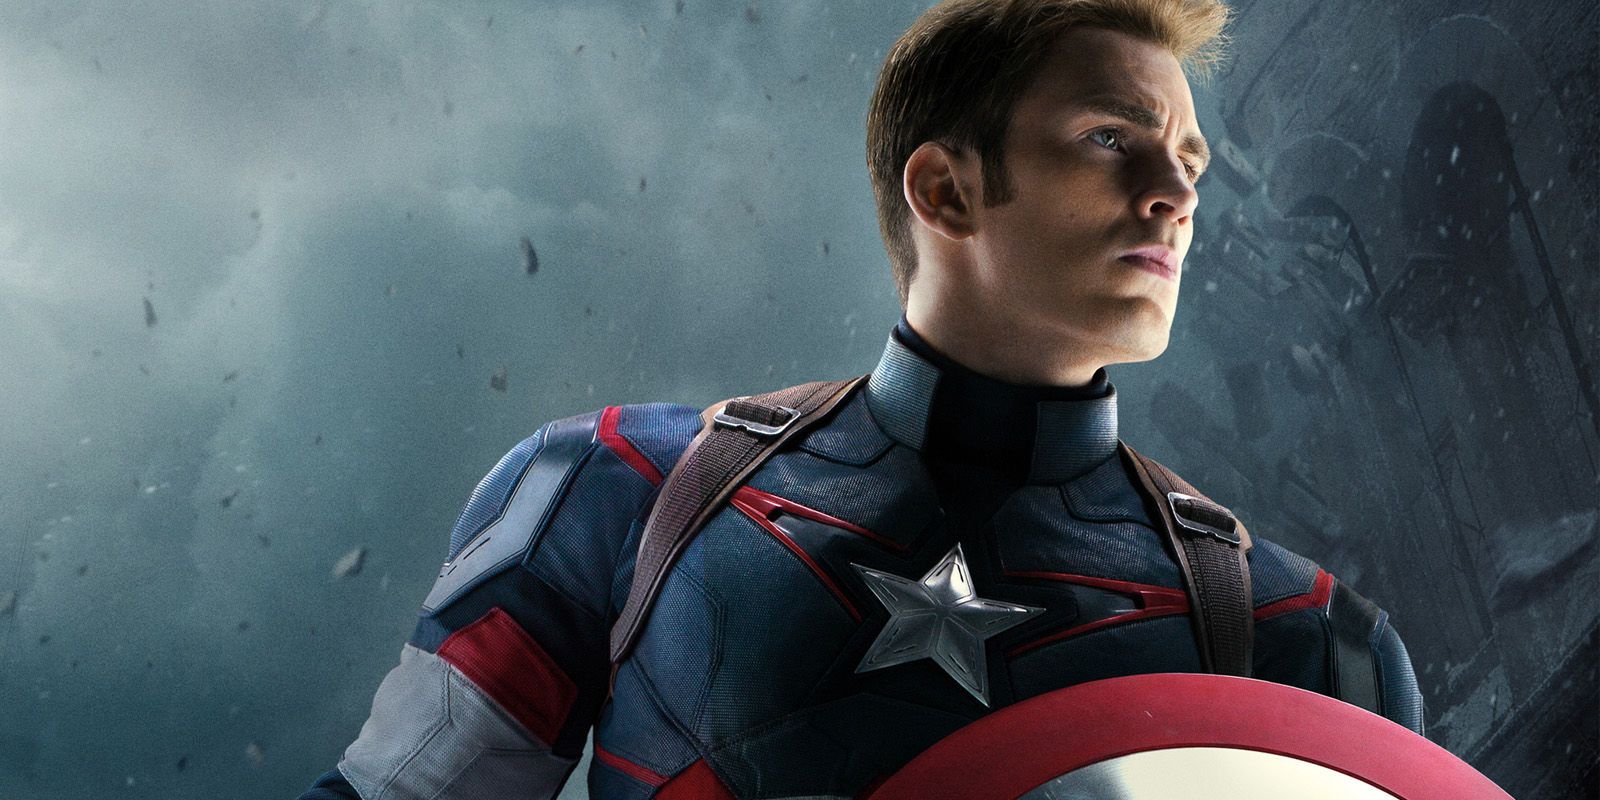 Chris Evans in Captain America Trilogy